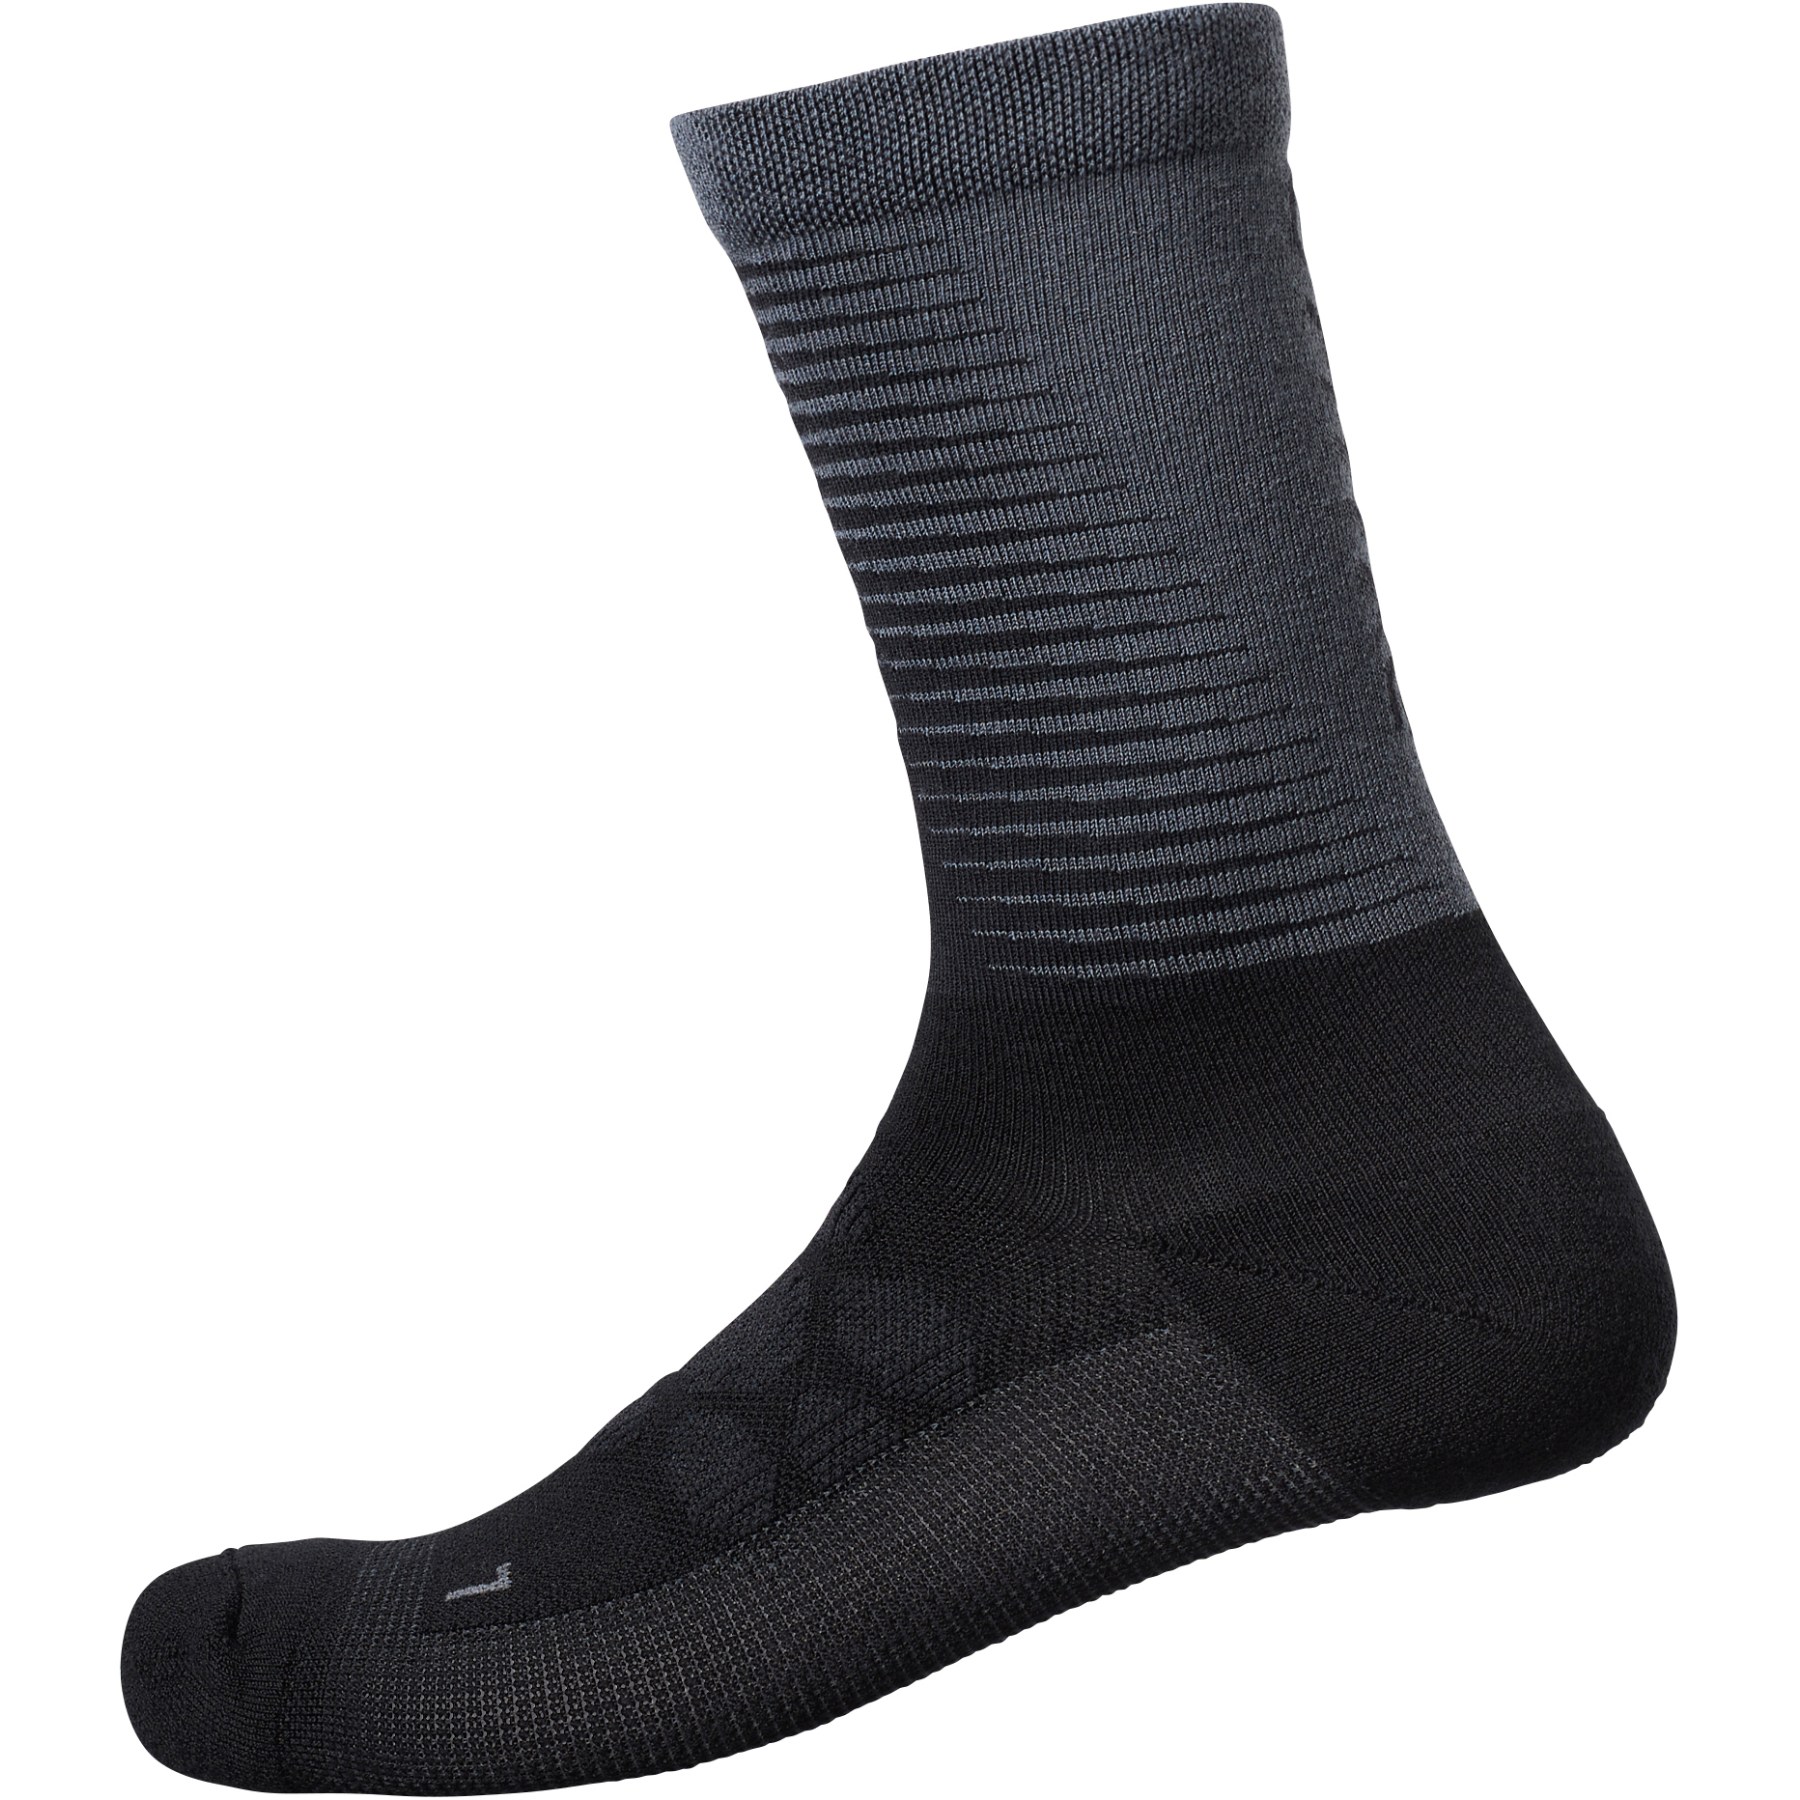 Shimano S-Phyre Merino Tall Socks - black/gray | BIKE24